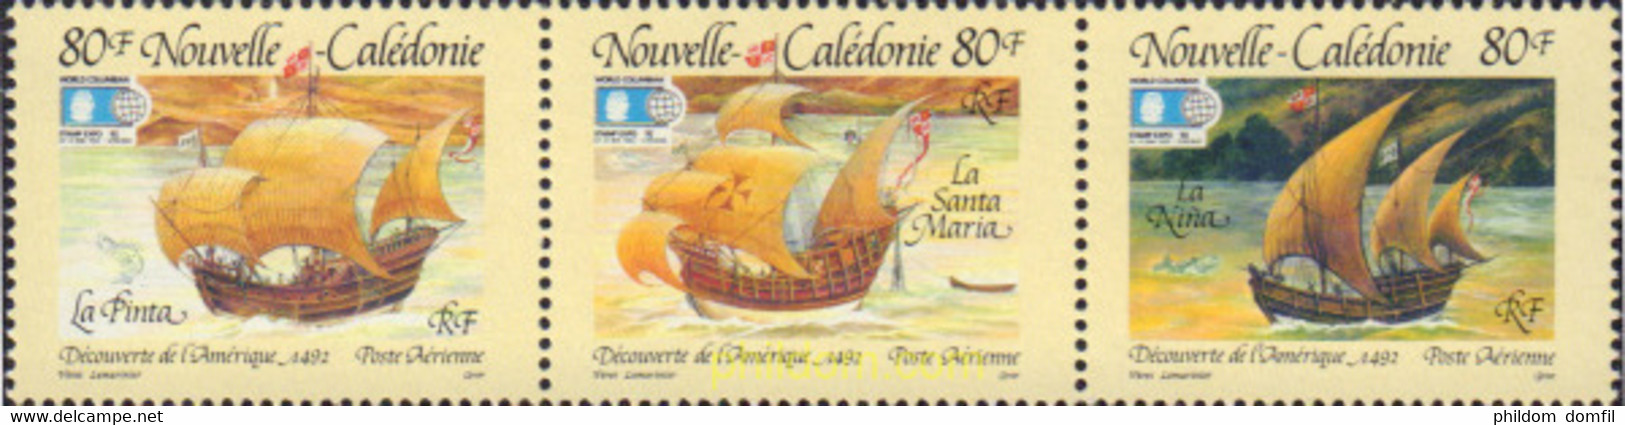 160887 MNH NUEVA CALEDONIA 1992 WORLD COLUMBIAN STAMP EXPO 92 - Used Stamps